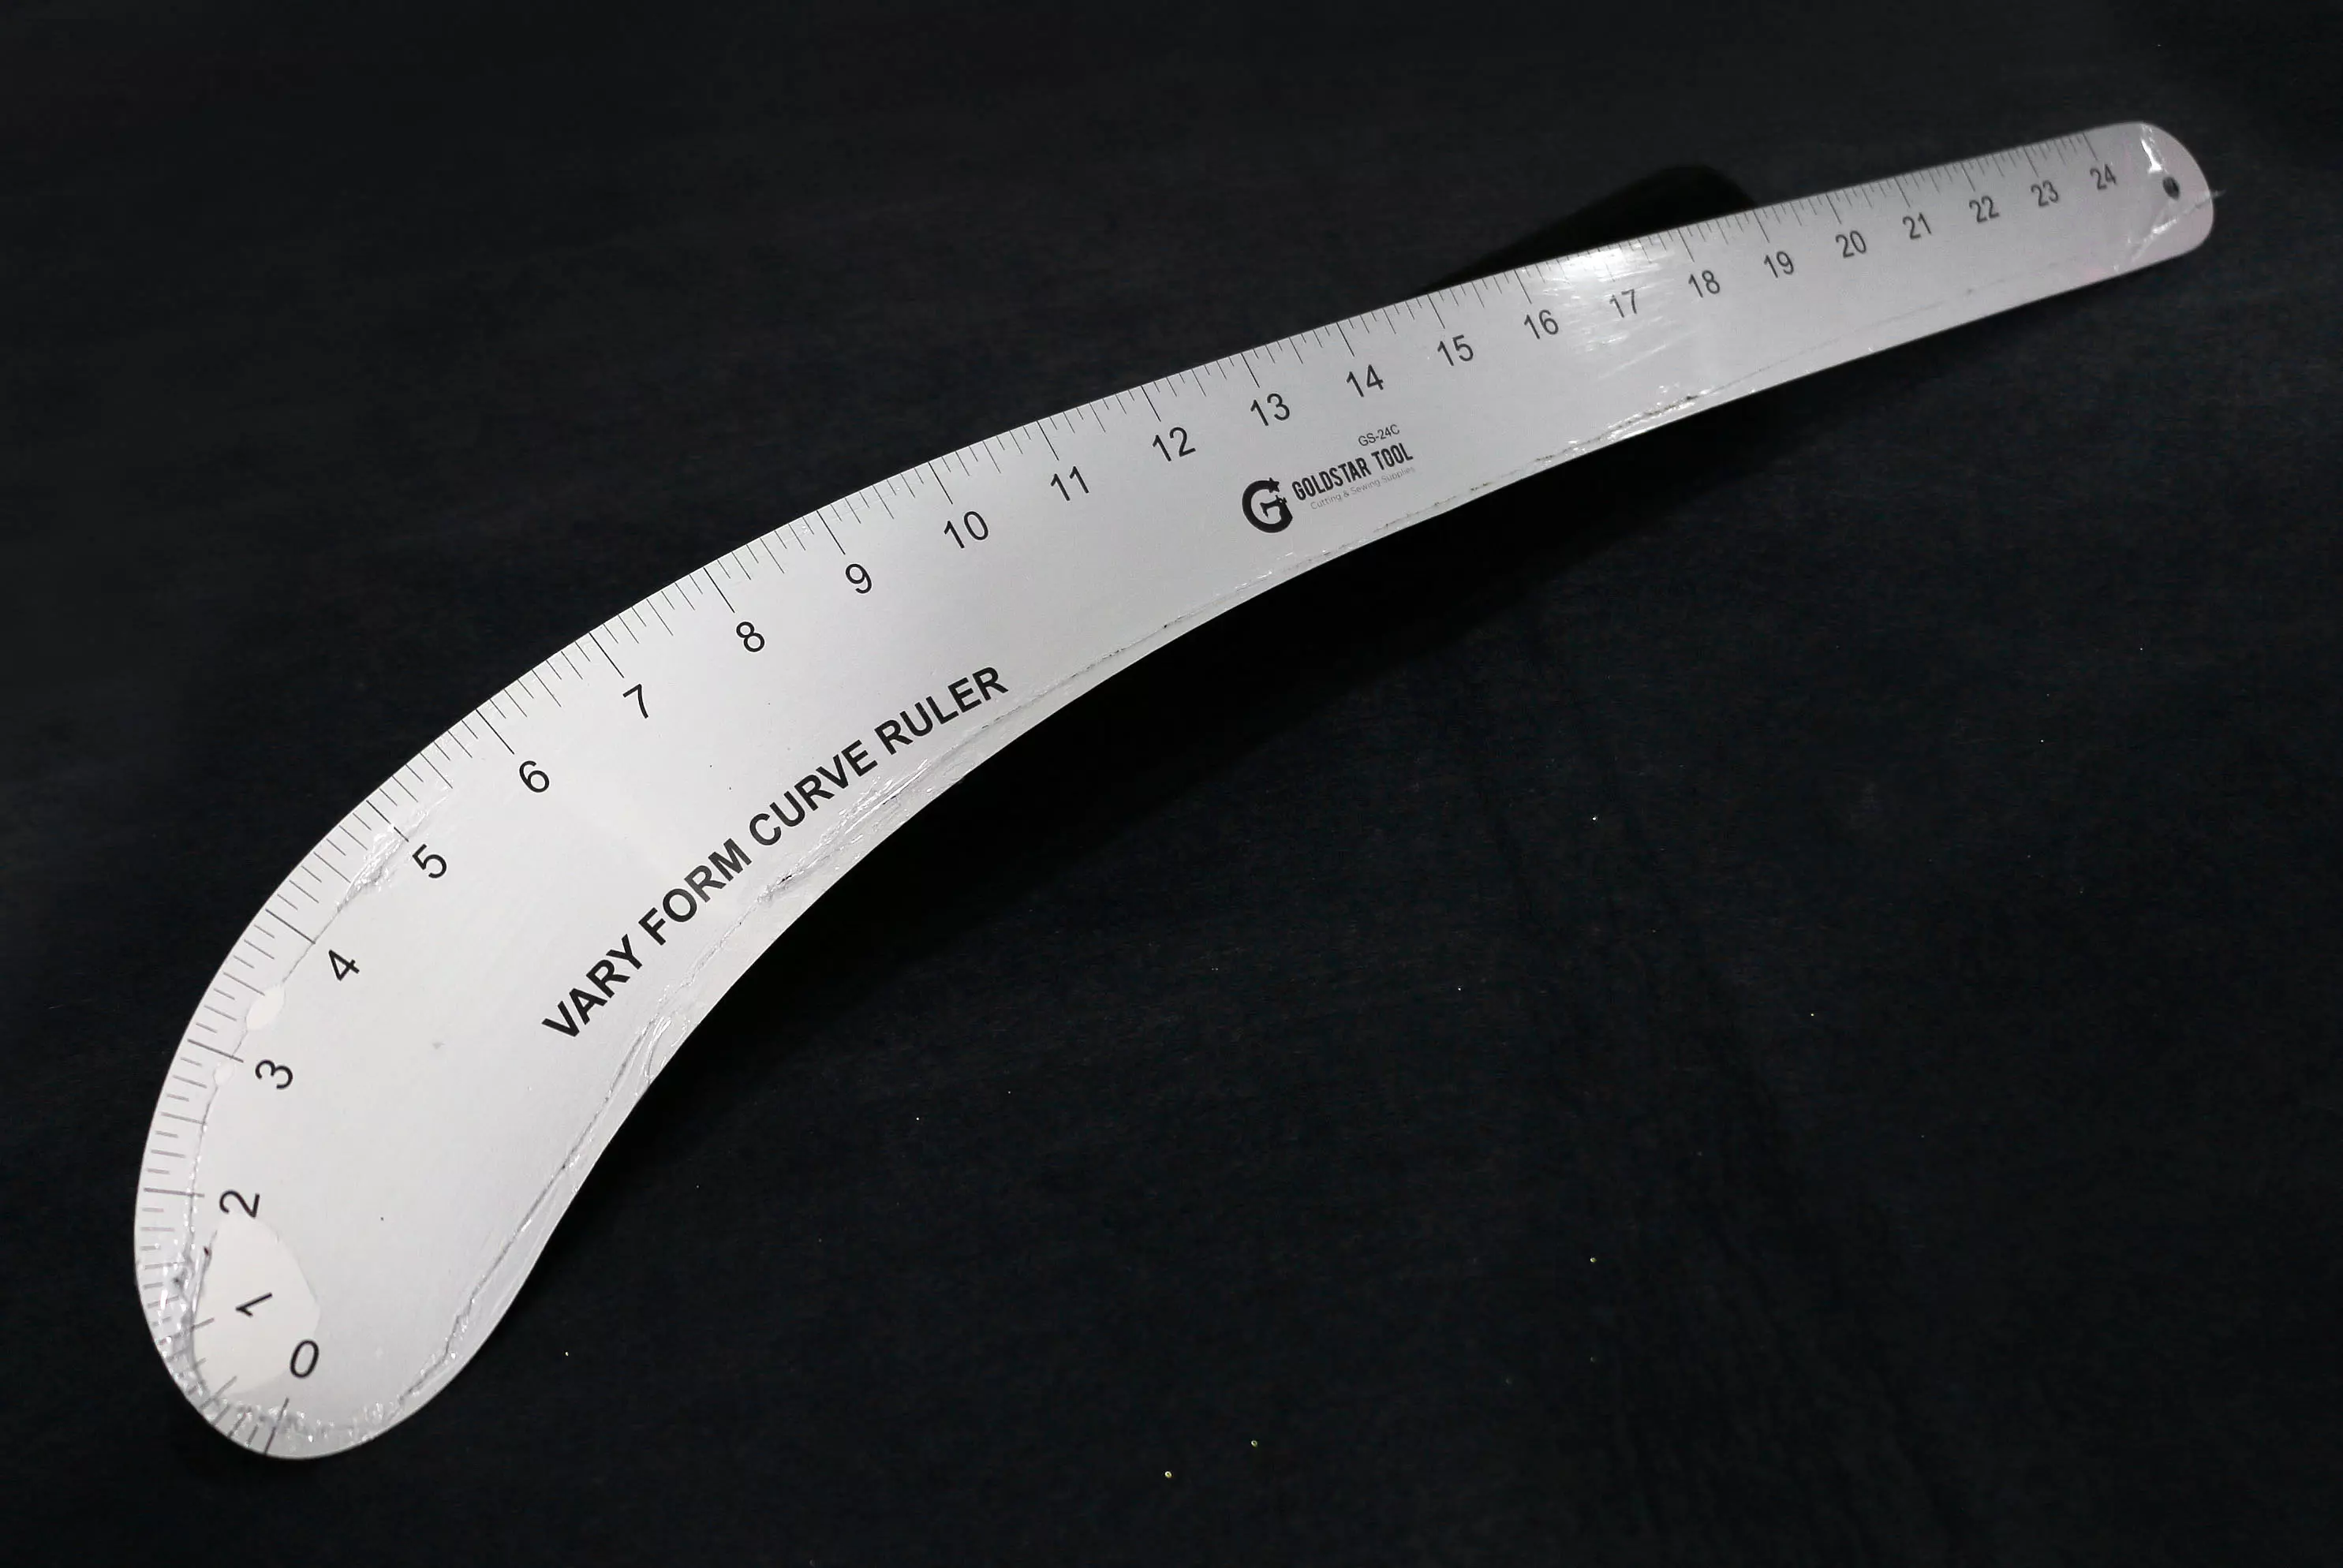 Fairgate Hip Curver Metal Ruler 24